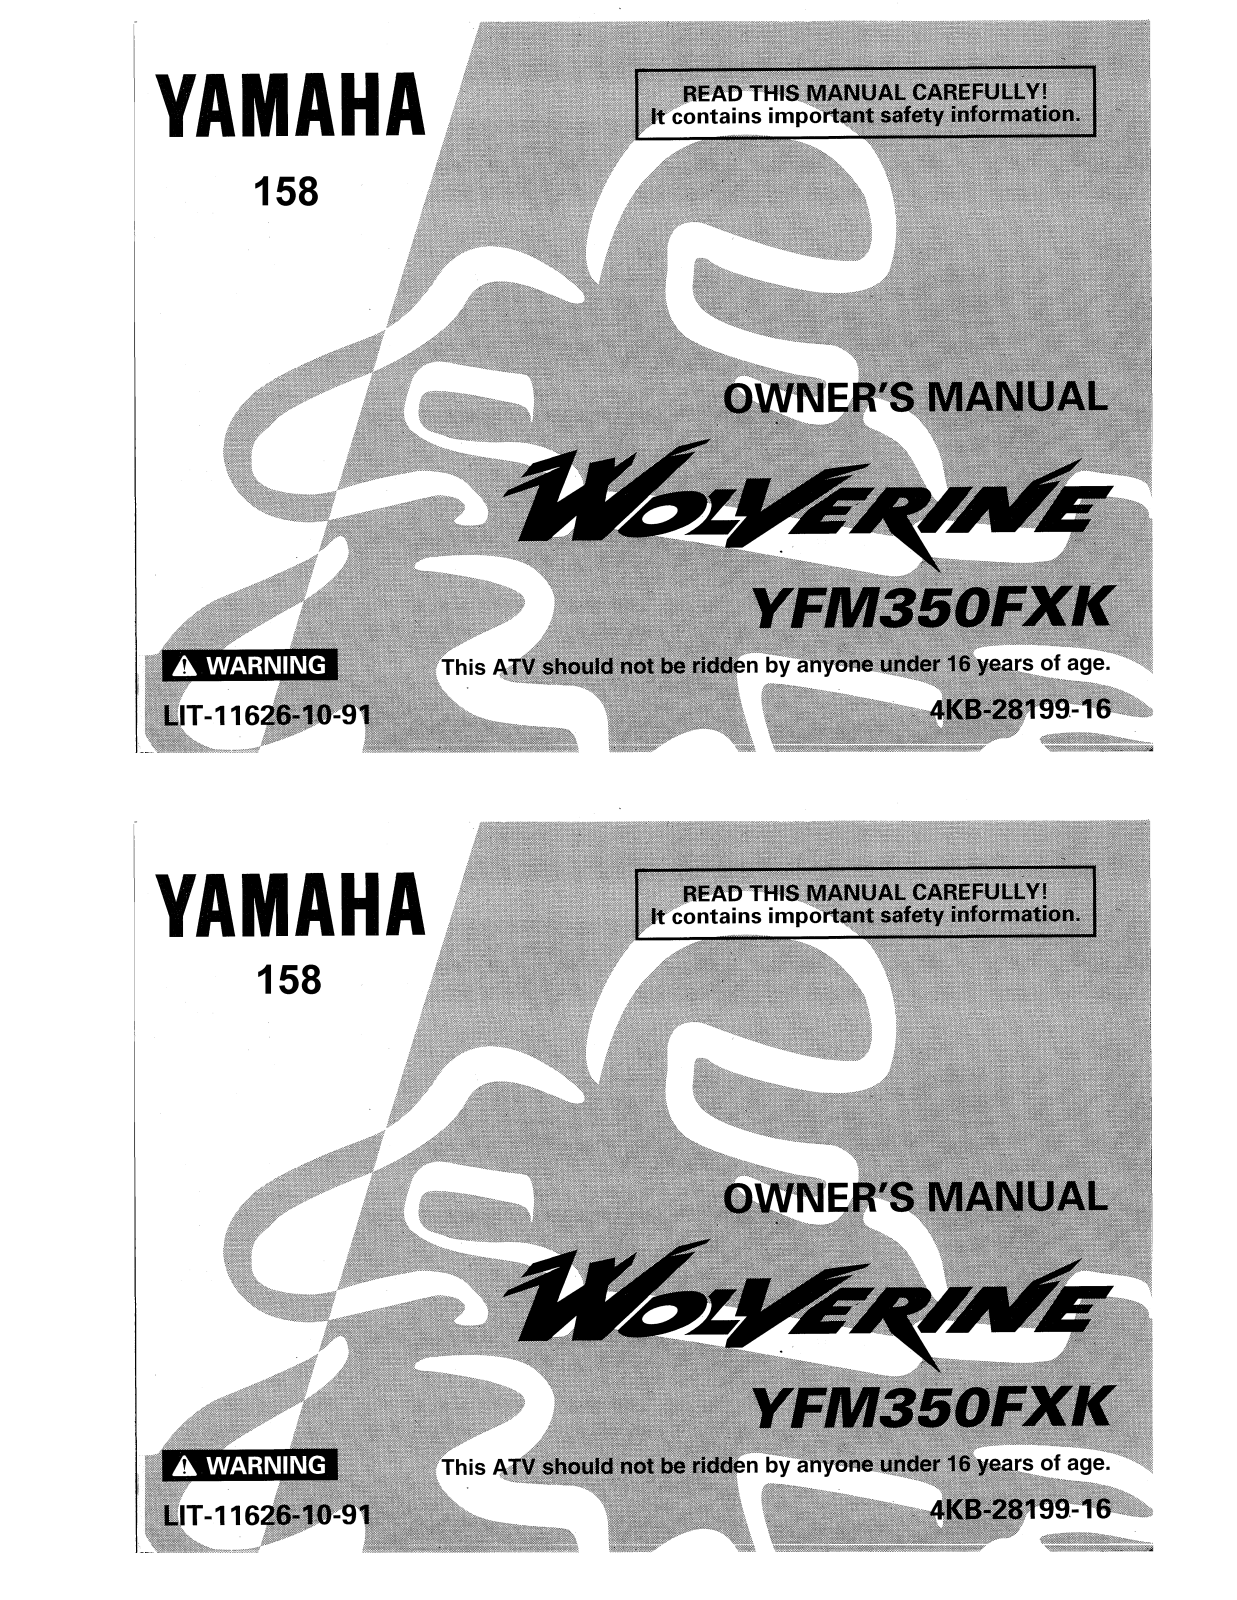 Yamaha WOLVERINE 350 User Manual